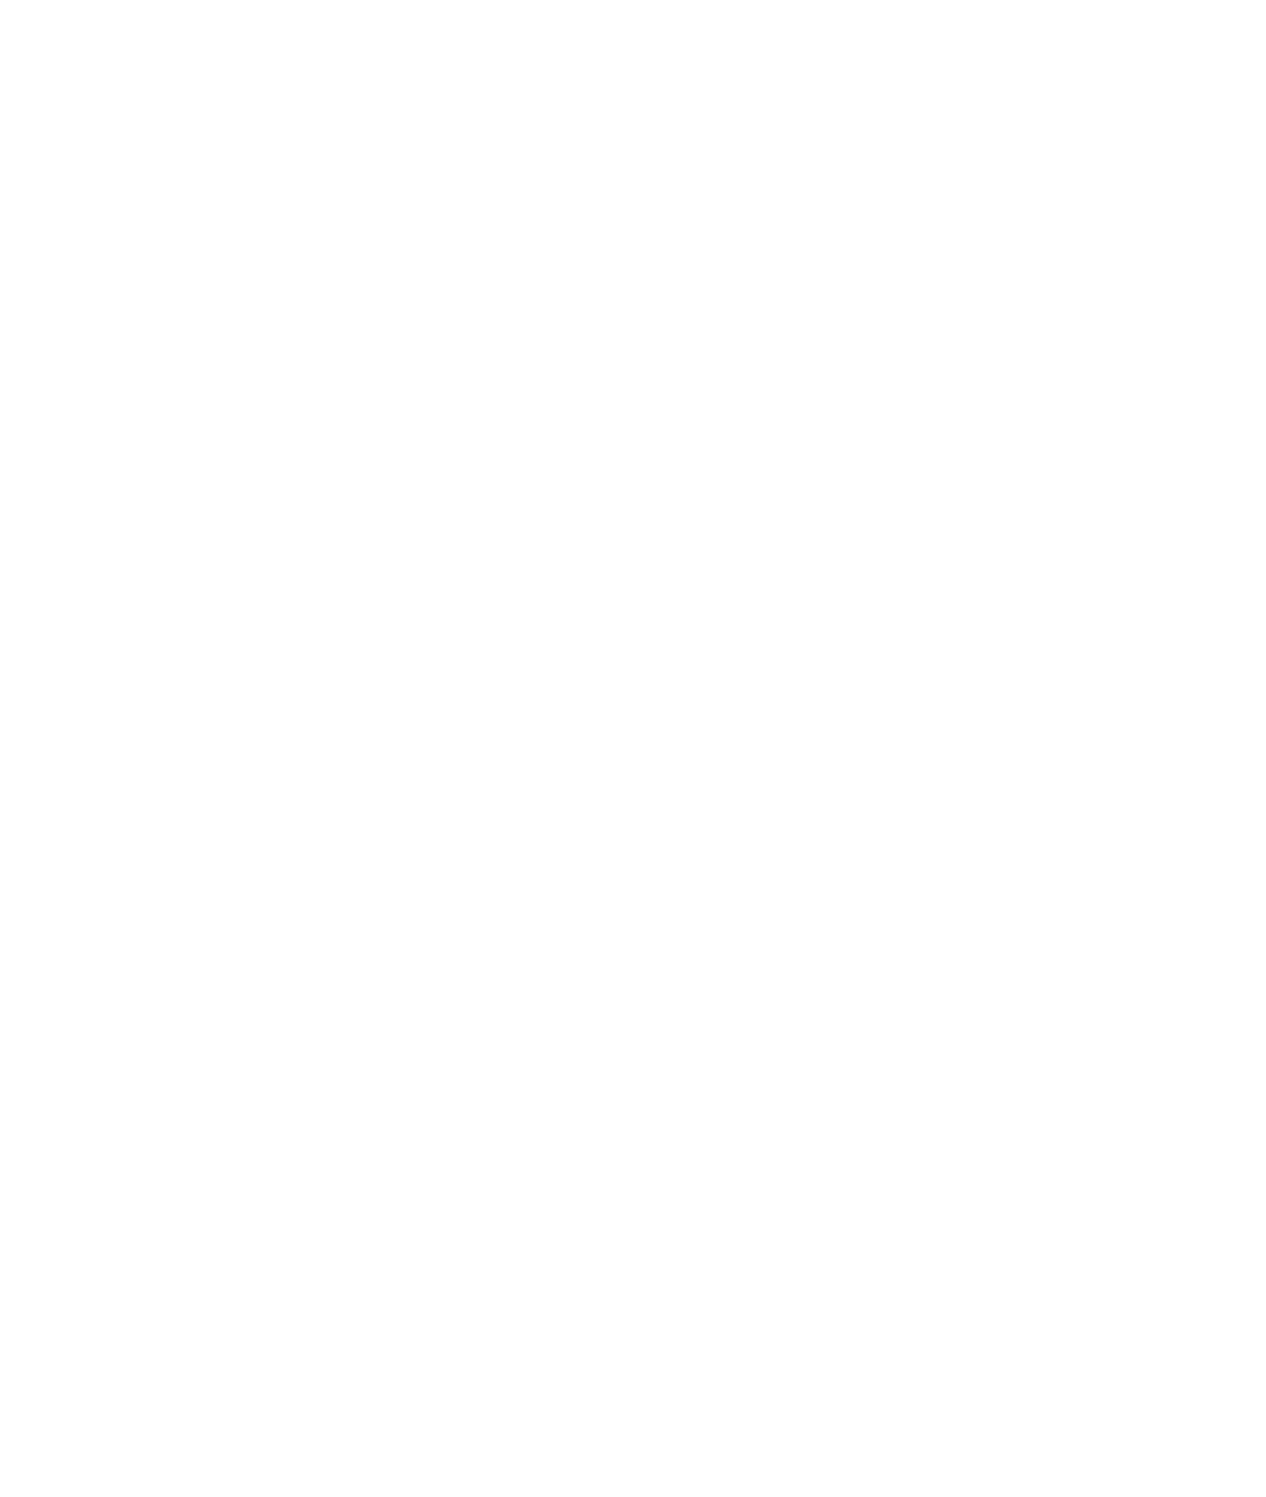 Heal Play Love